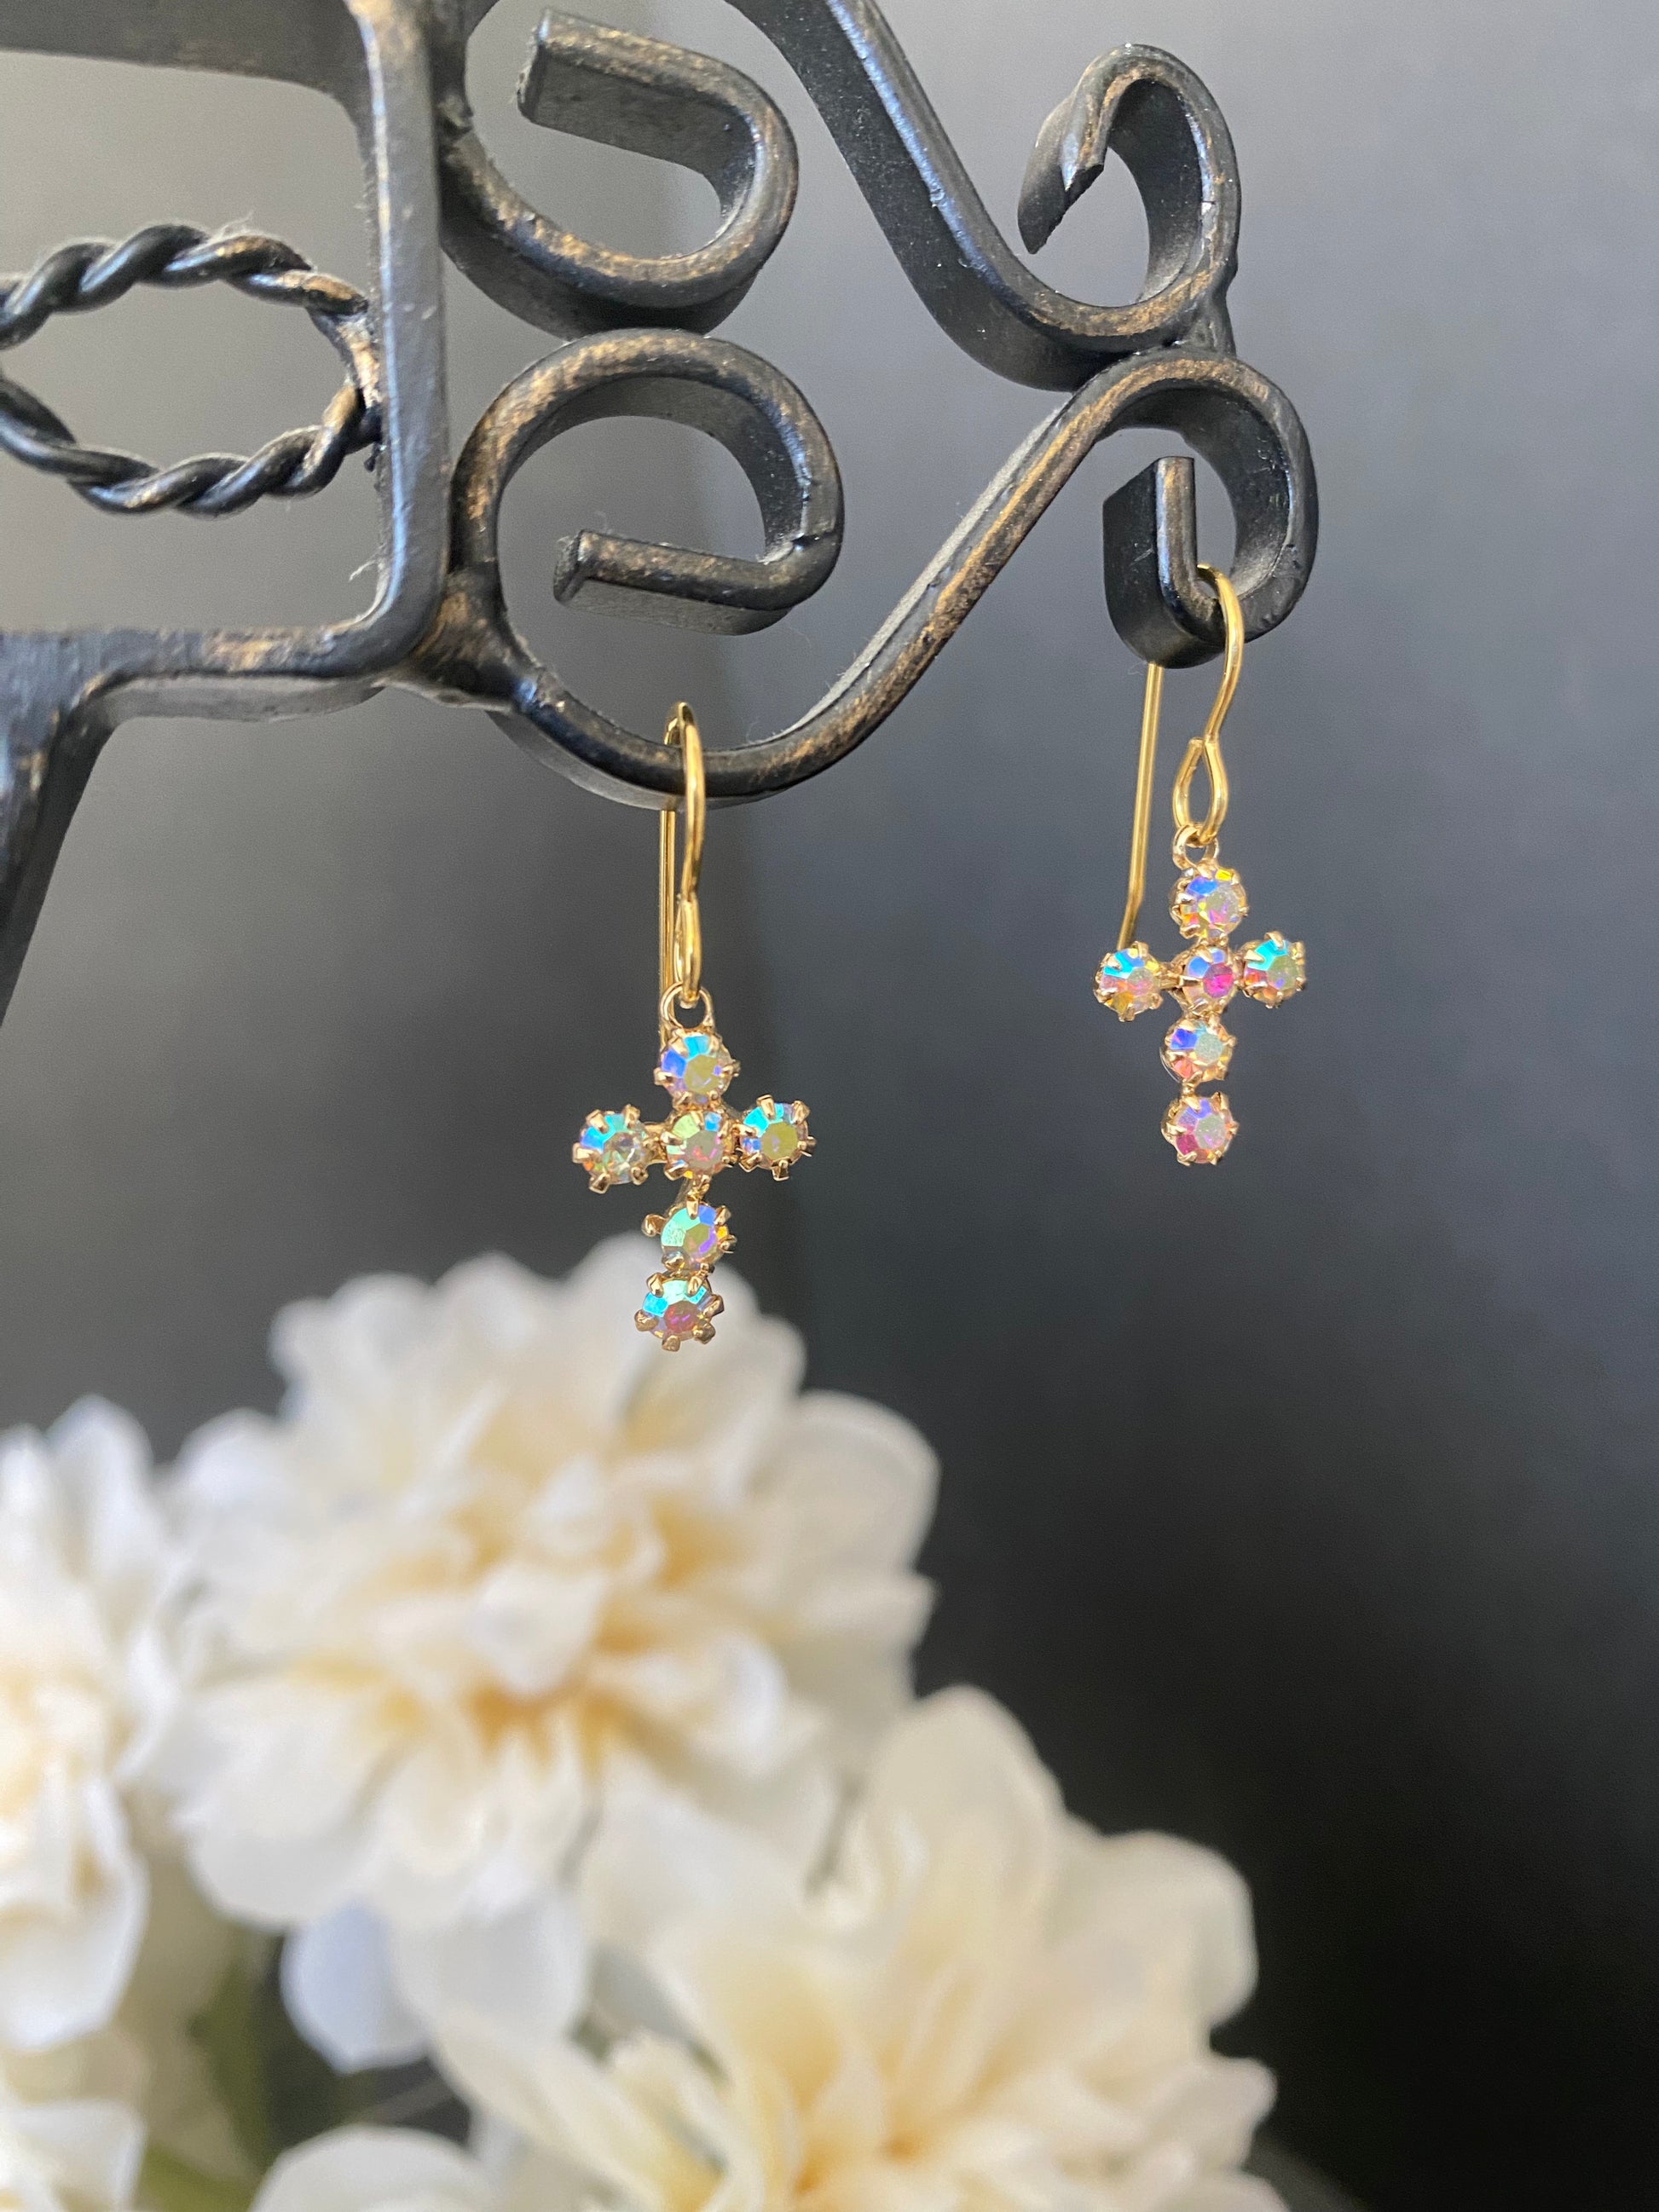 Crystal cross charms, gold metal earrings, jewelry. - Andria Bieber Designs 